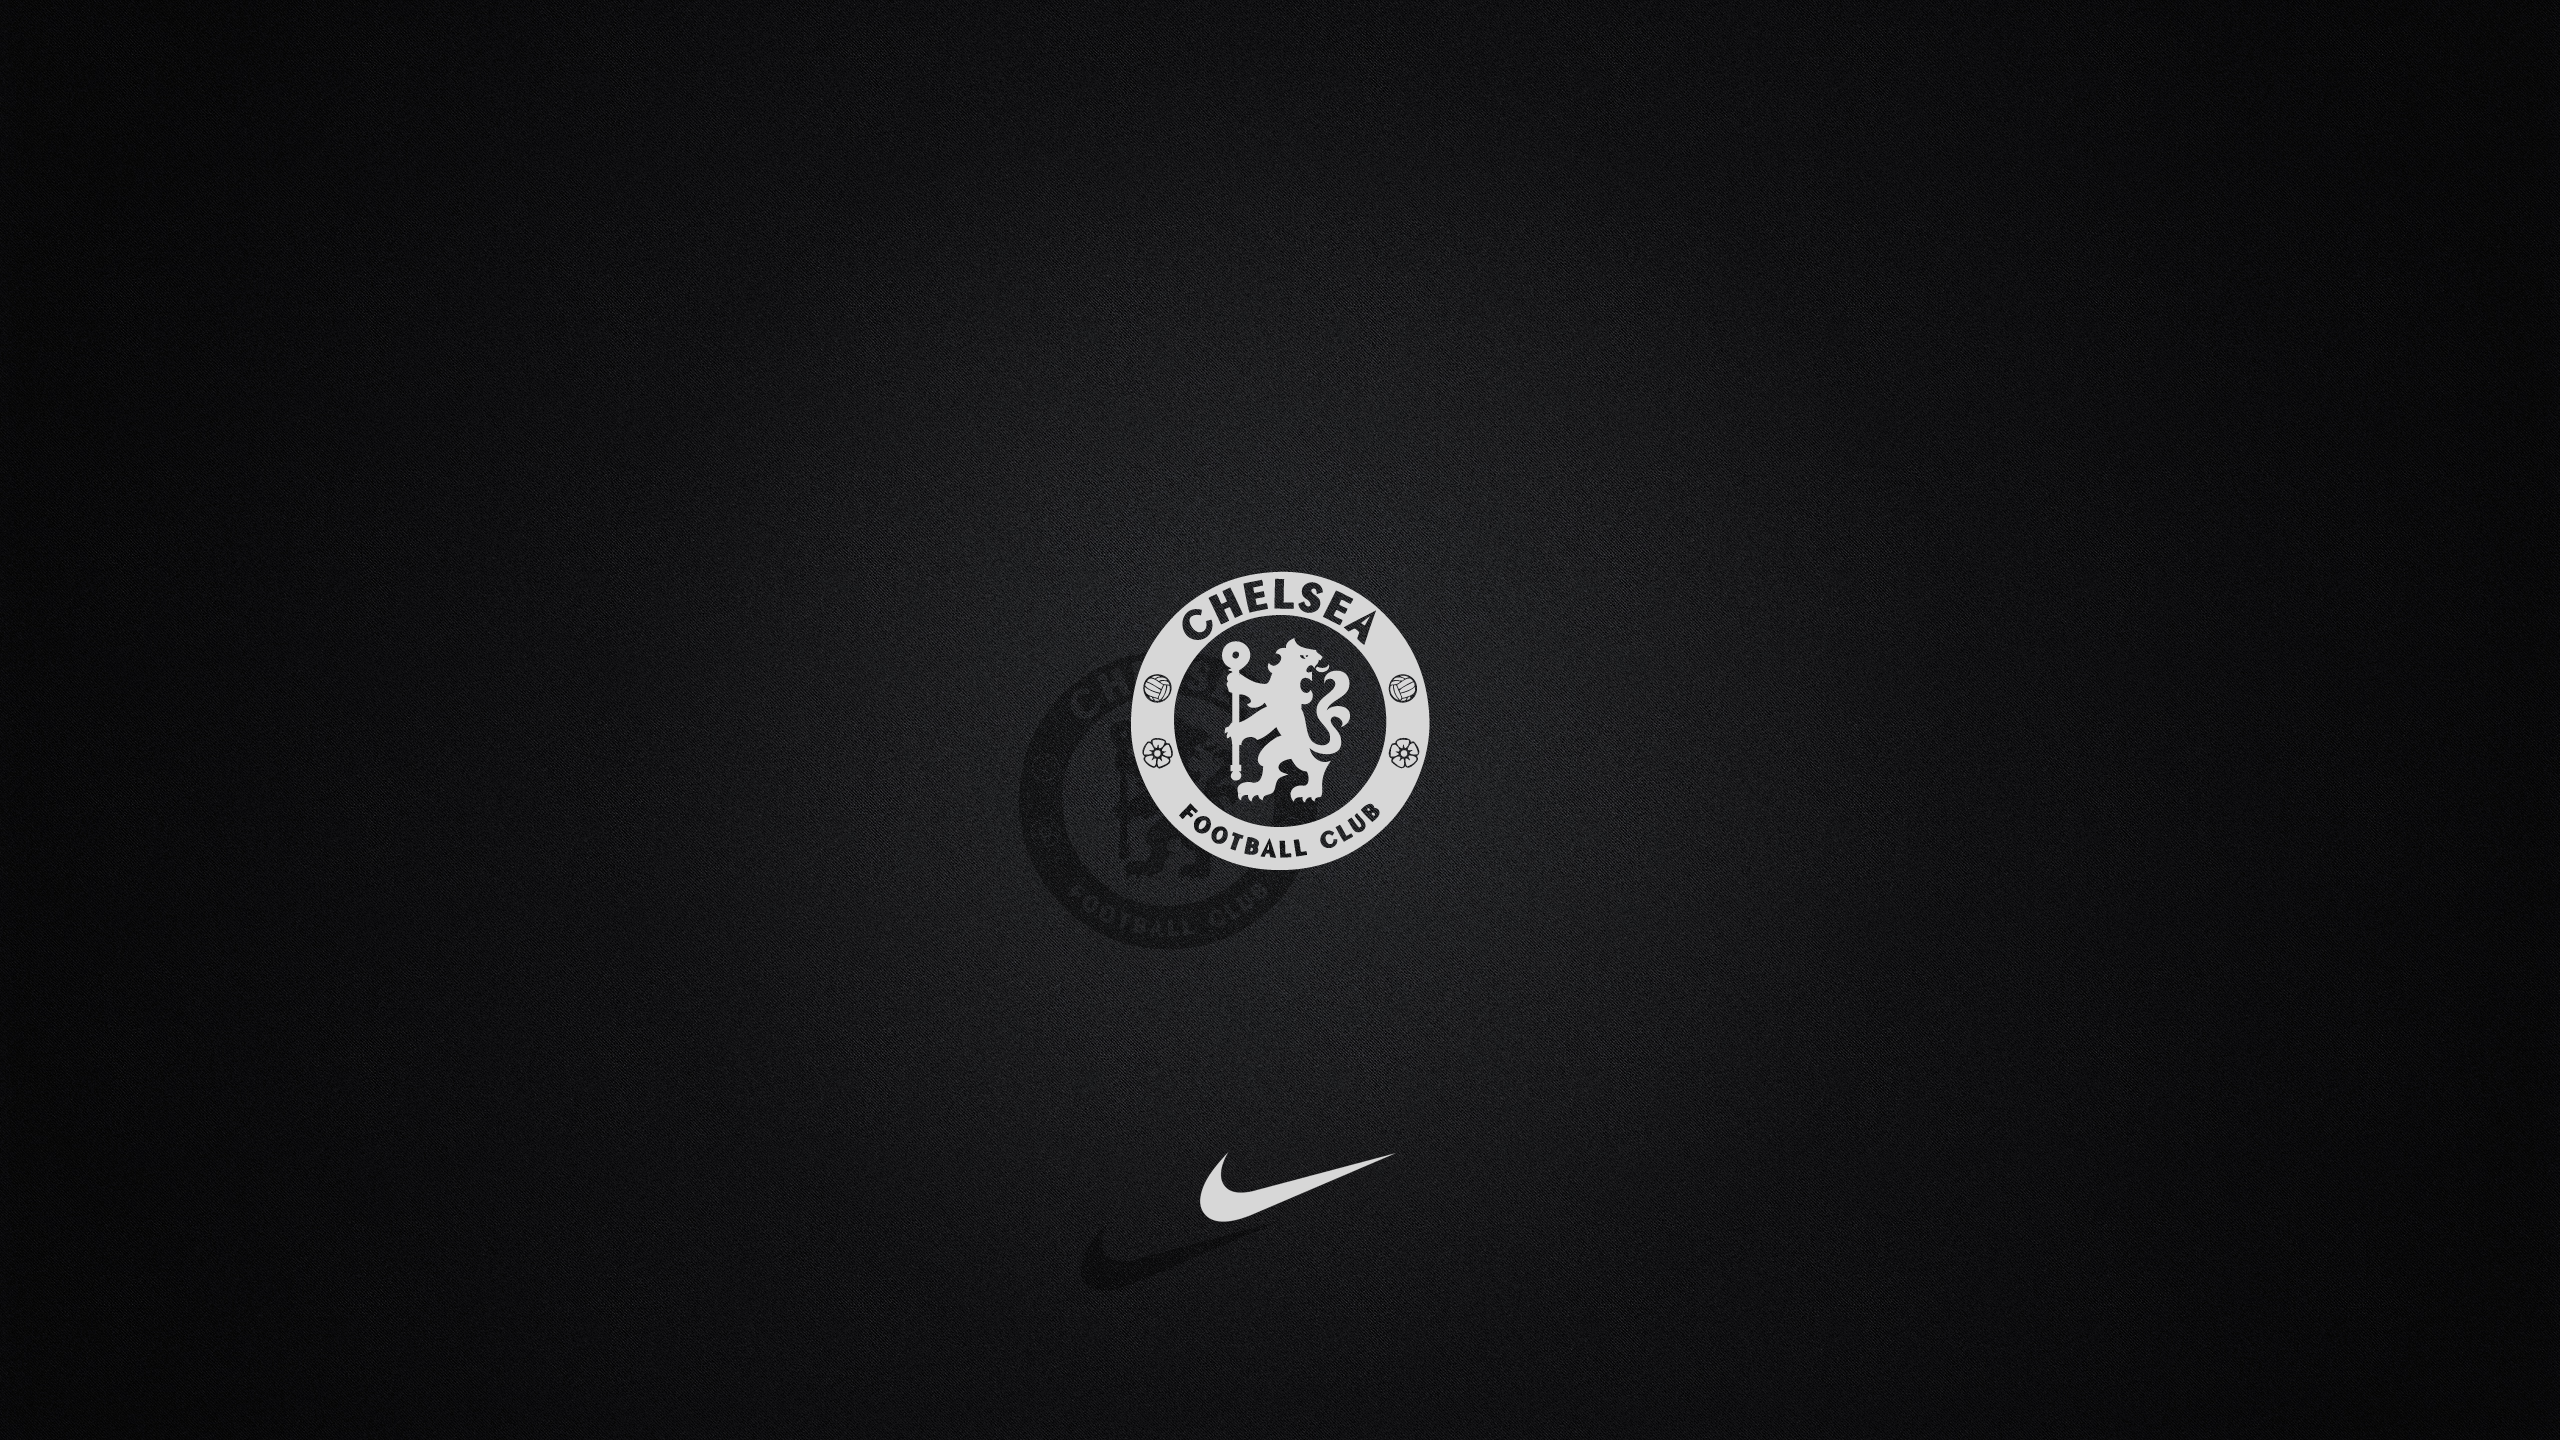 General 2560x1440 logo Chelsea FC Nike black background monochrome soccer sport minimalism dark background